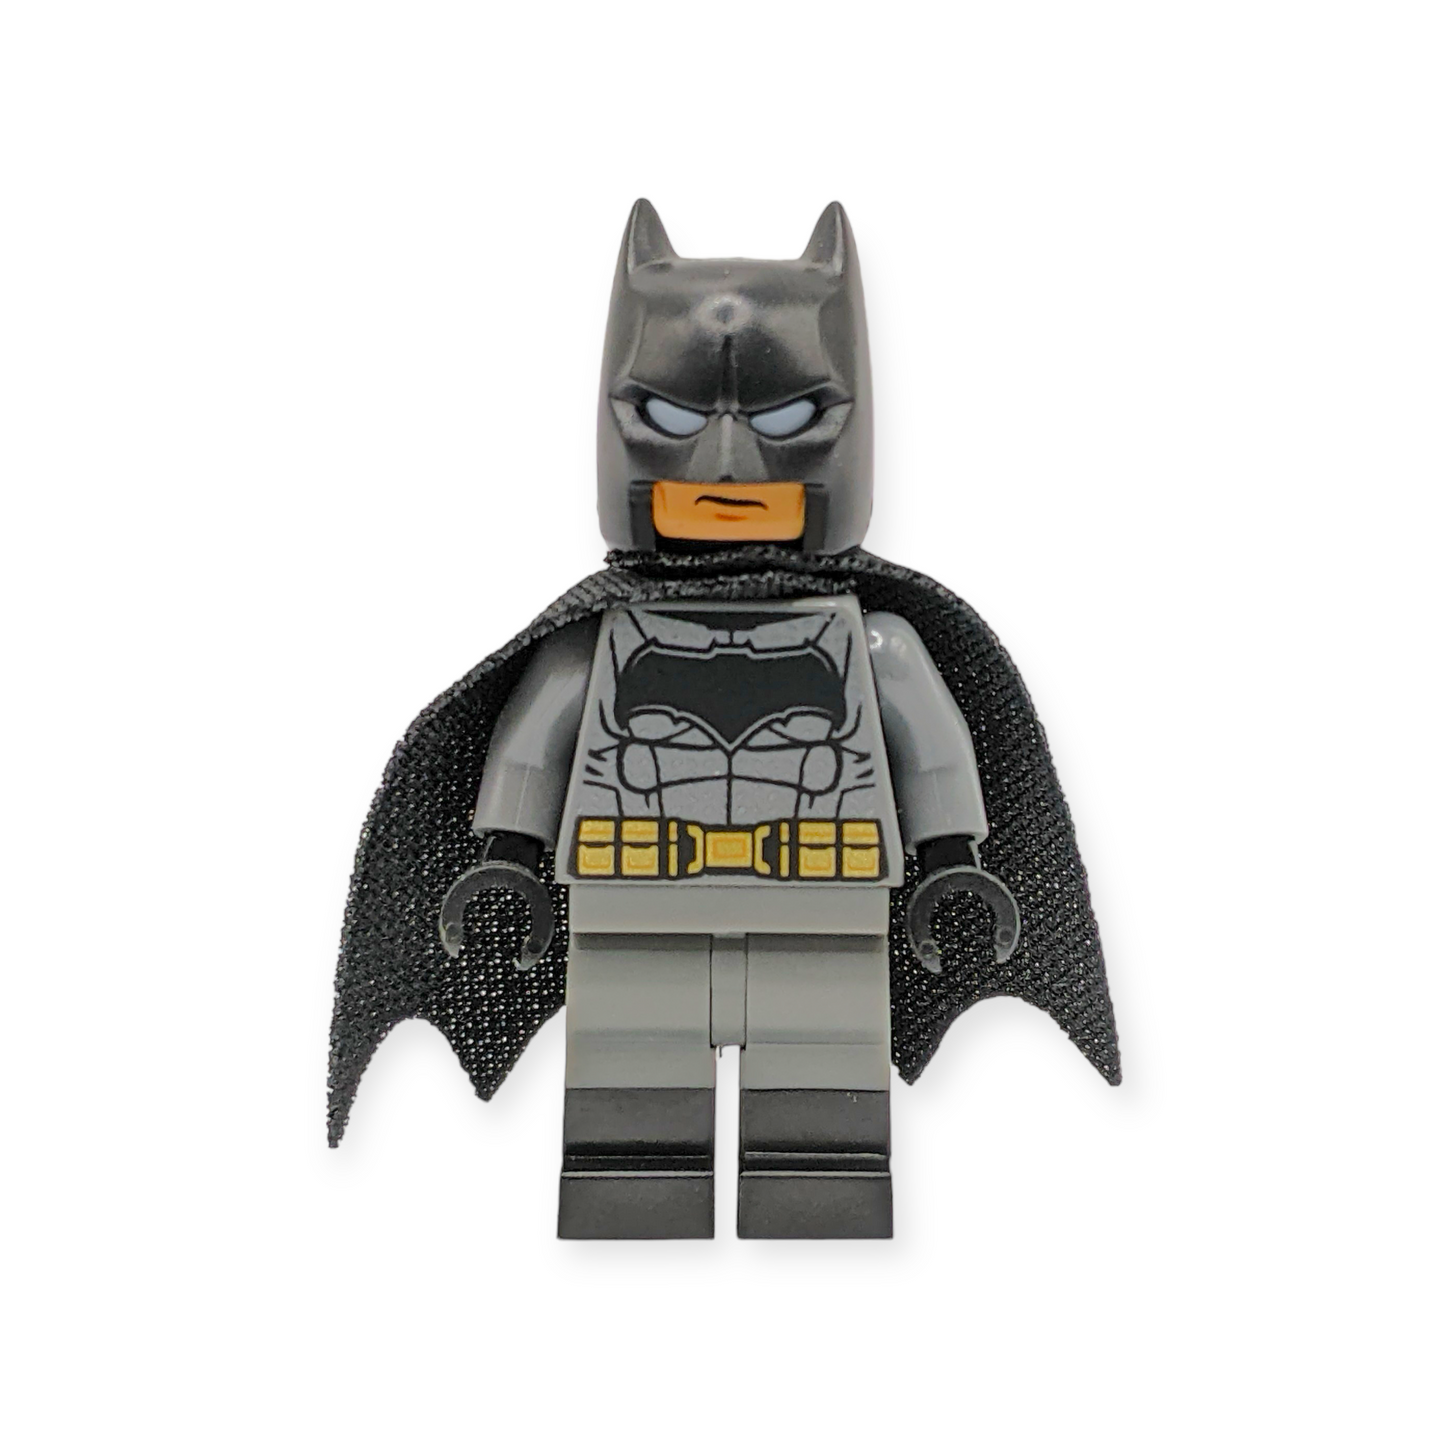 LEGO Minifigur Batman - Dark Bluish Gray Suit, Gold Belt